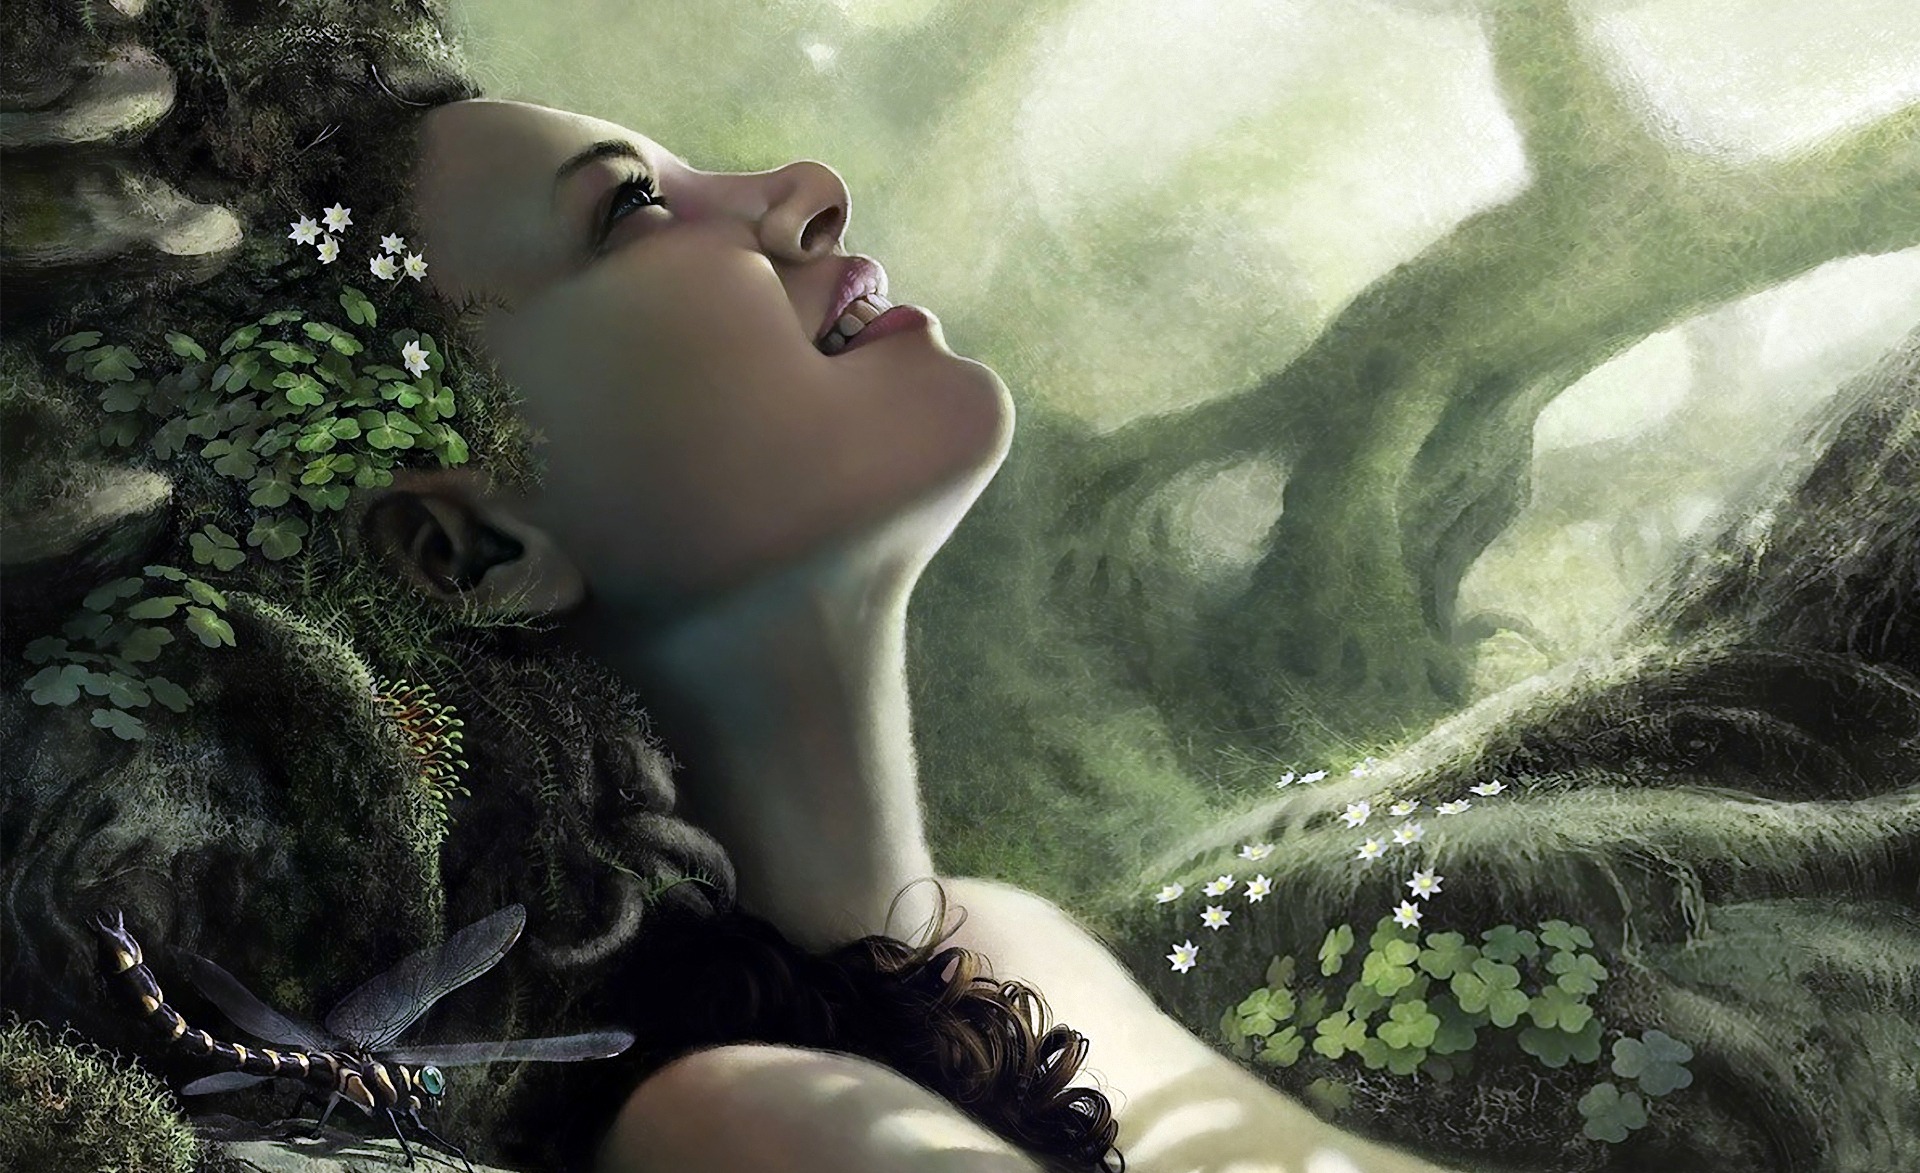 Fantasy sylvan desktop wallpaper: a picturesque scene with enchanting woodland elements